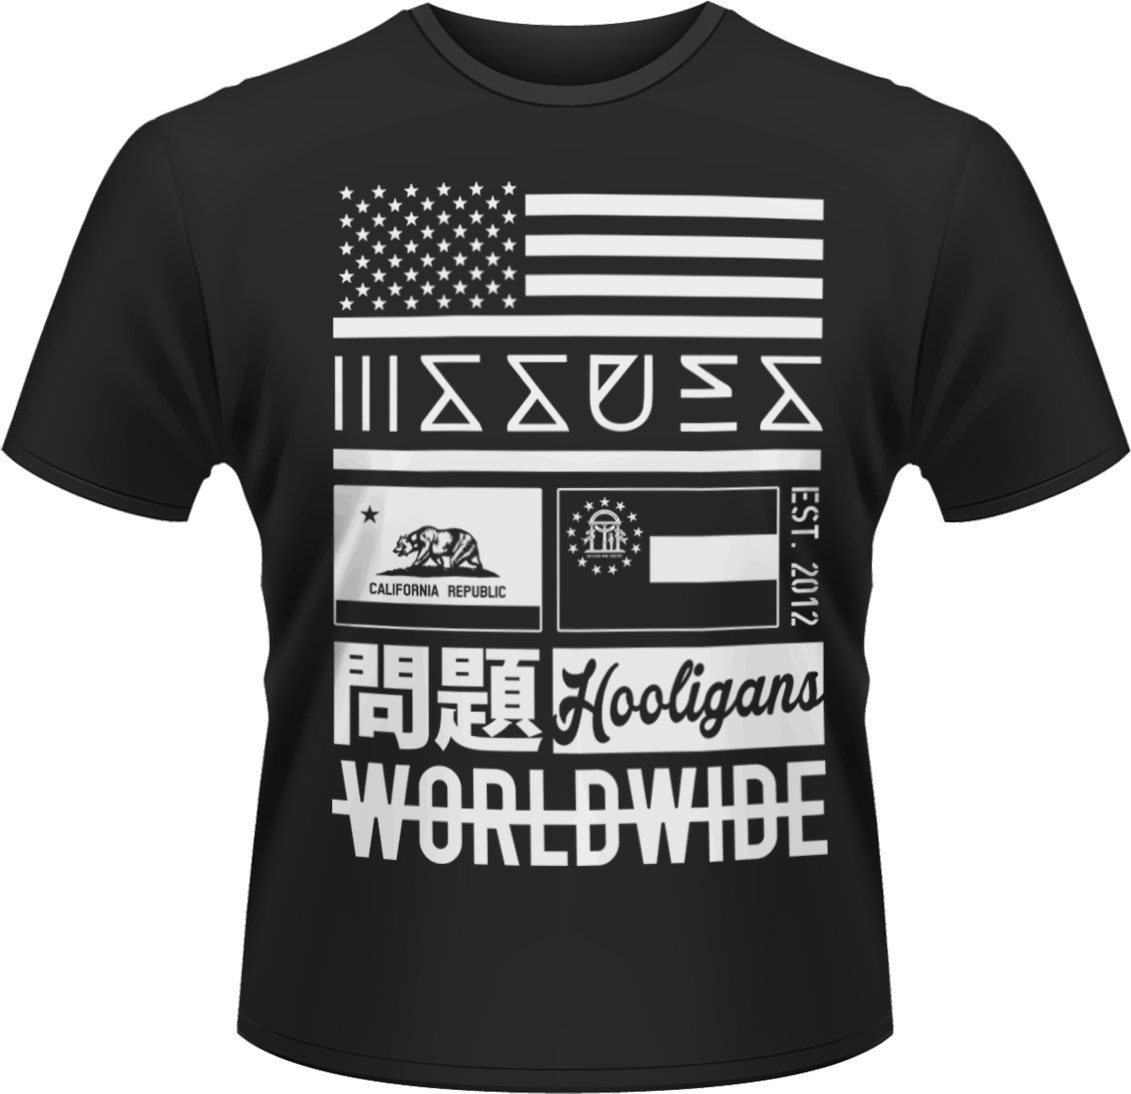 T-Shirt Issues T-Shirt Worldwide Herren Schwarz M